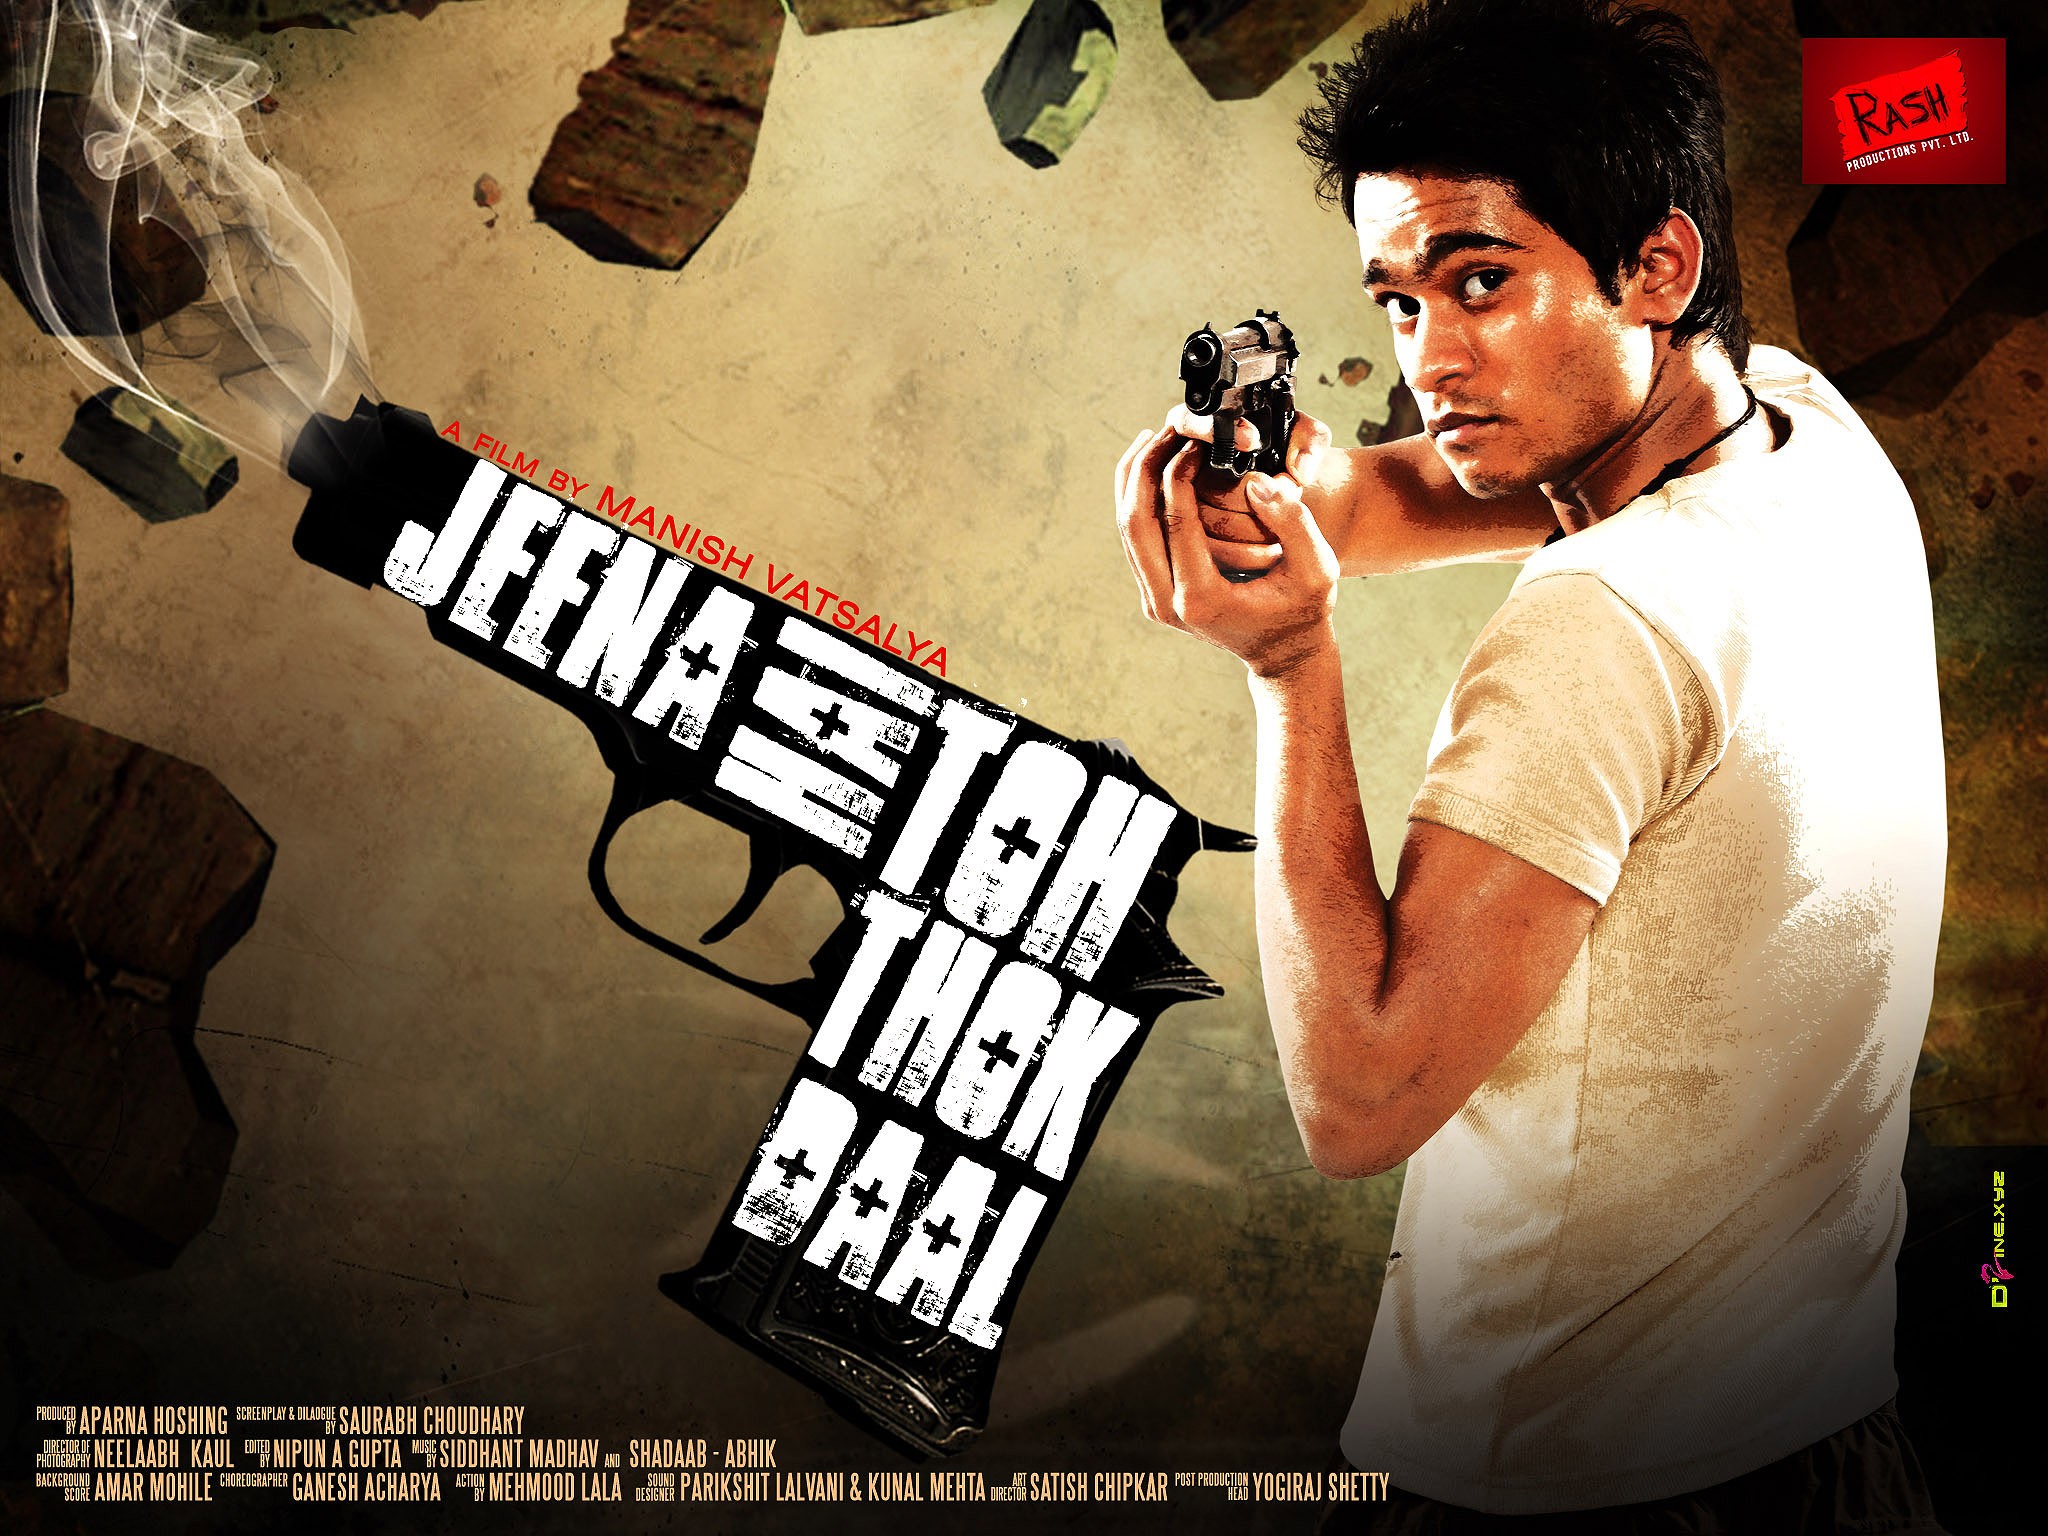 Mega Sized Movie Poster Image for Jeena Hai Toh Thok Daal (#10 of 12)